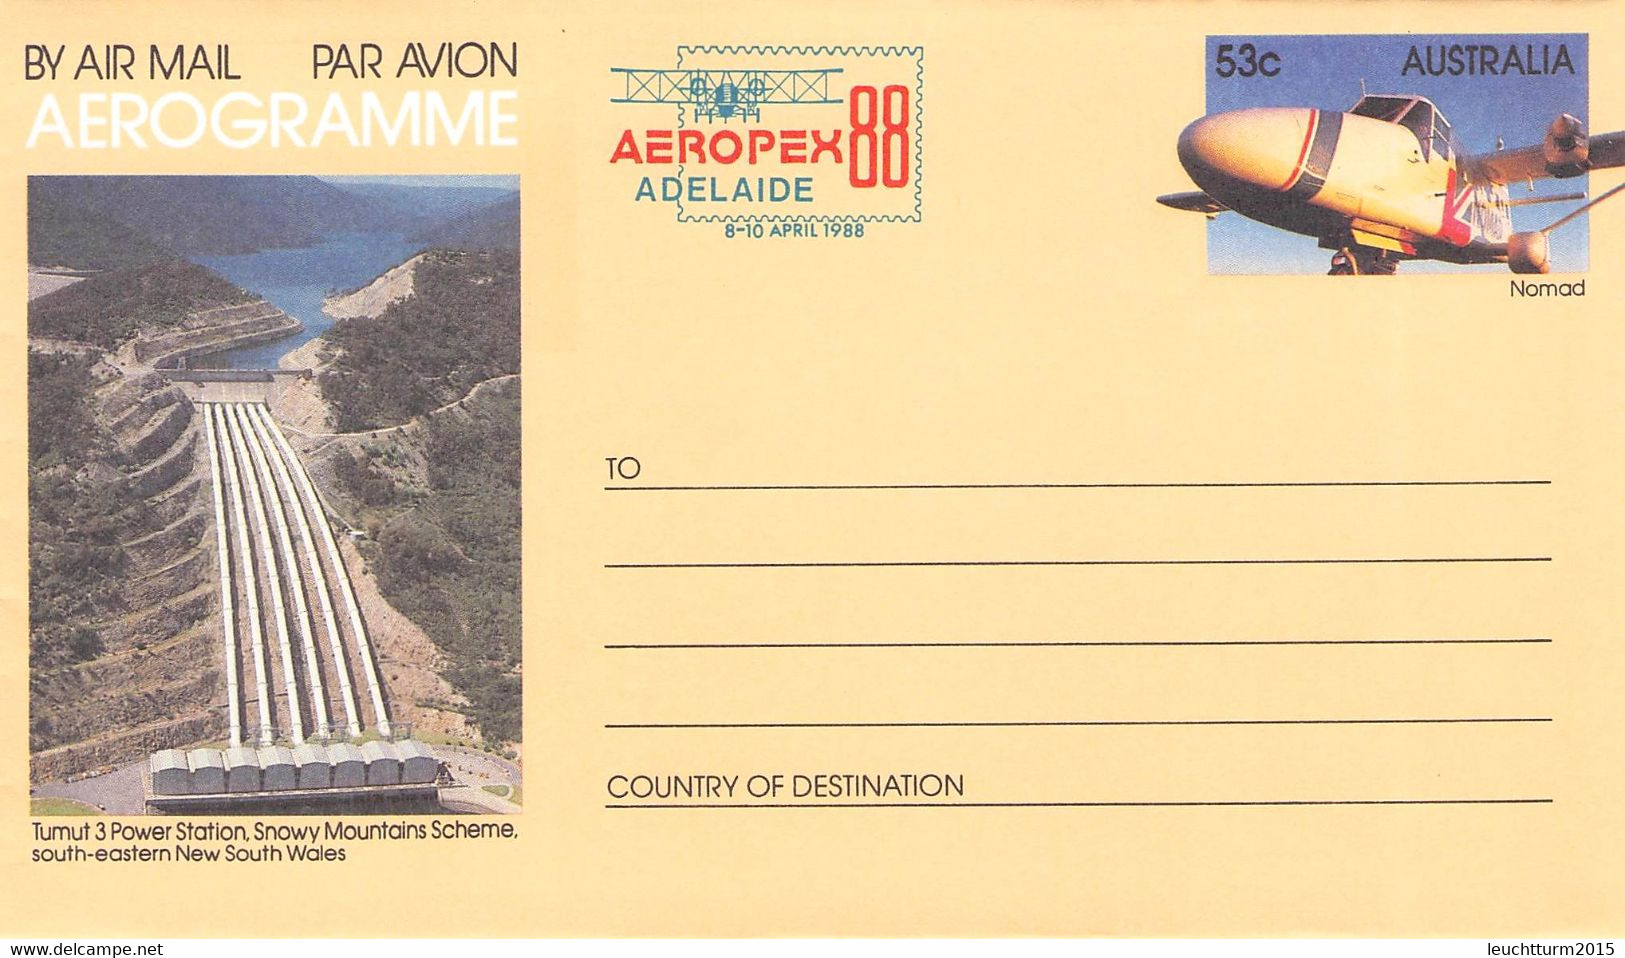 AUSTRALIA - SET AEROGRAMME 53c 1988 AEROPEX '88 MNH /QD103 - Aerogrammi